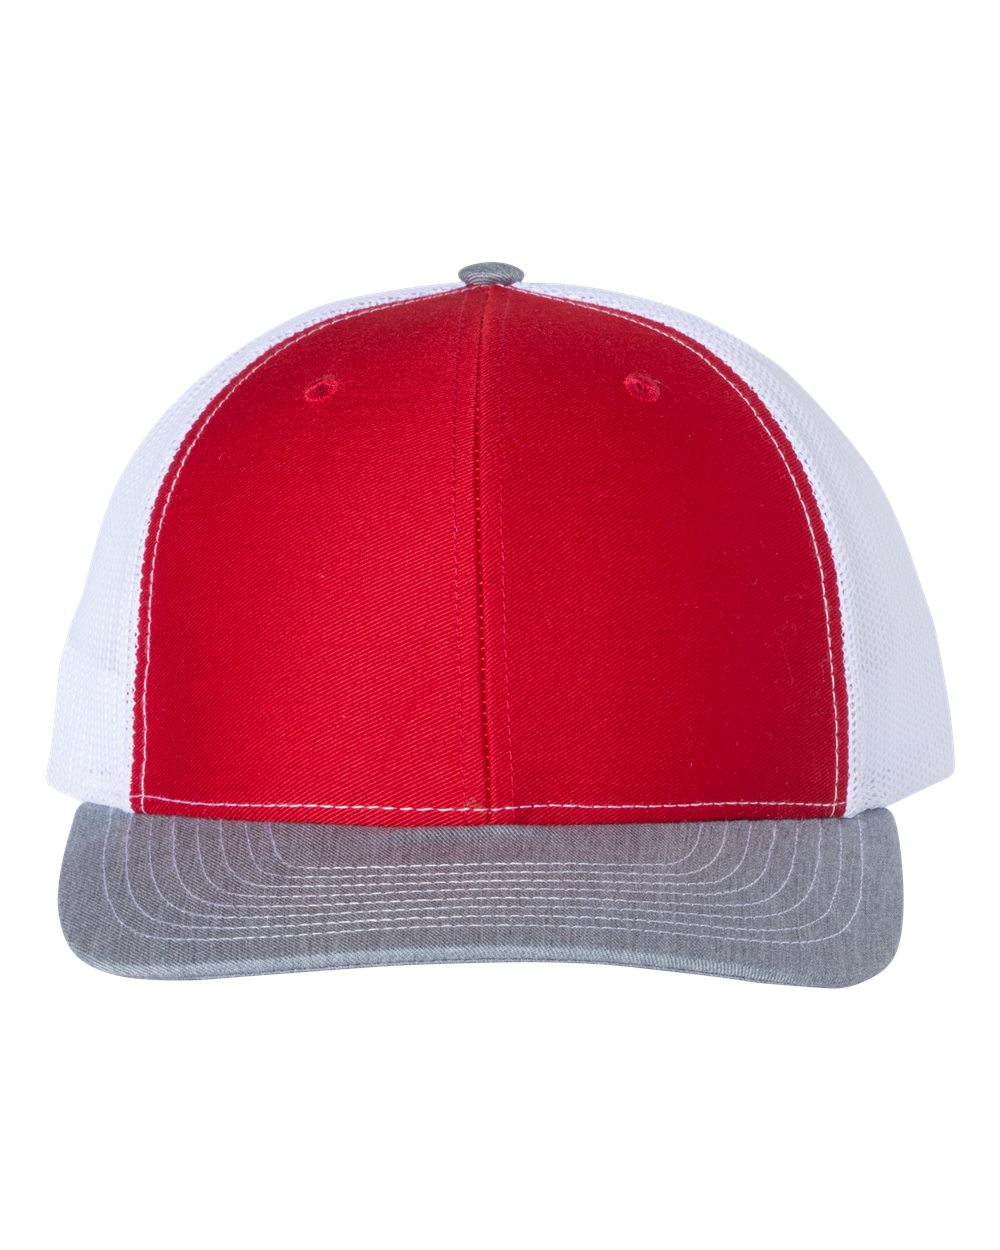 Richardson Snapback Trucker Hat (112) in Red/White/Heather Grey